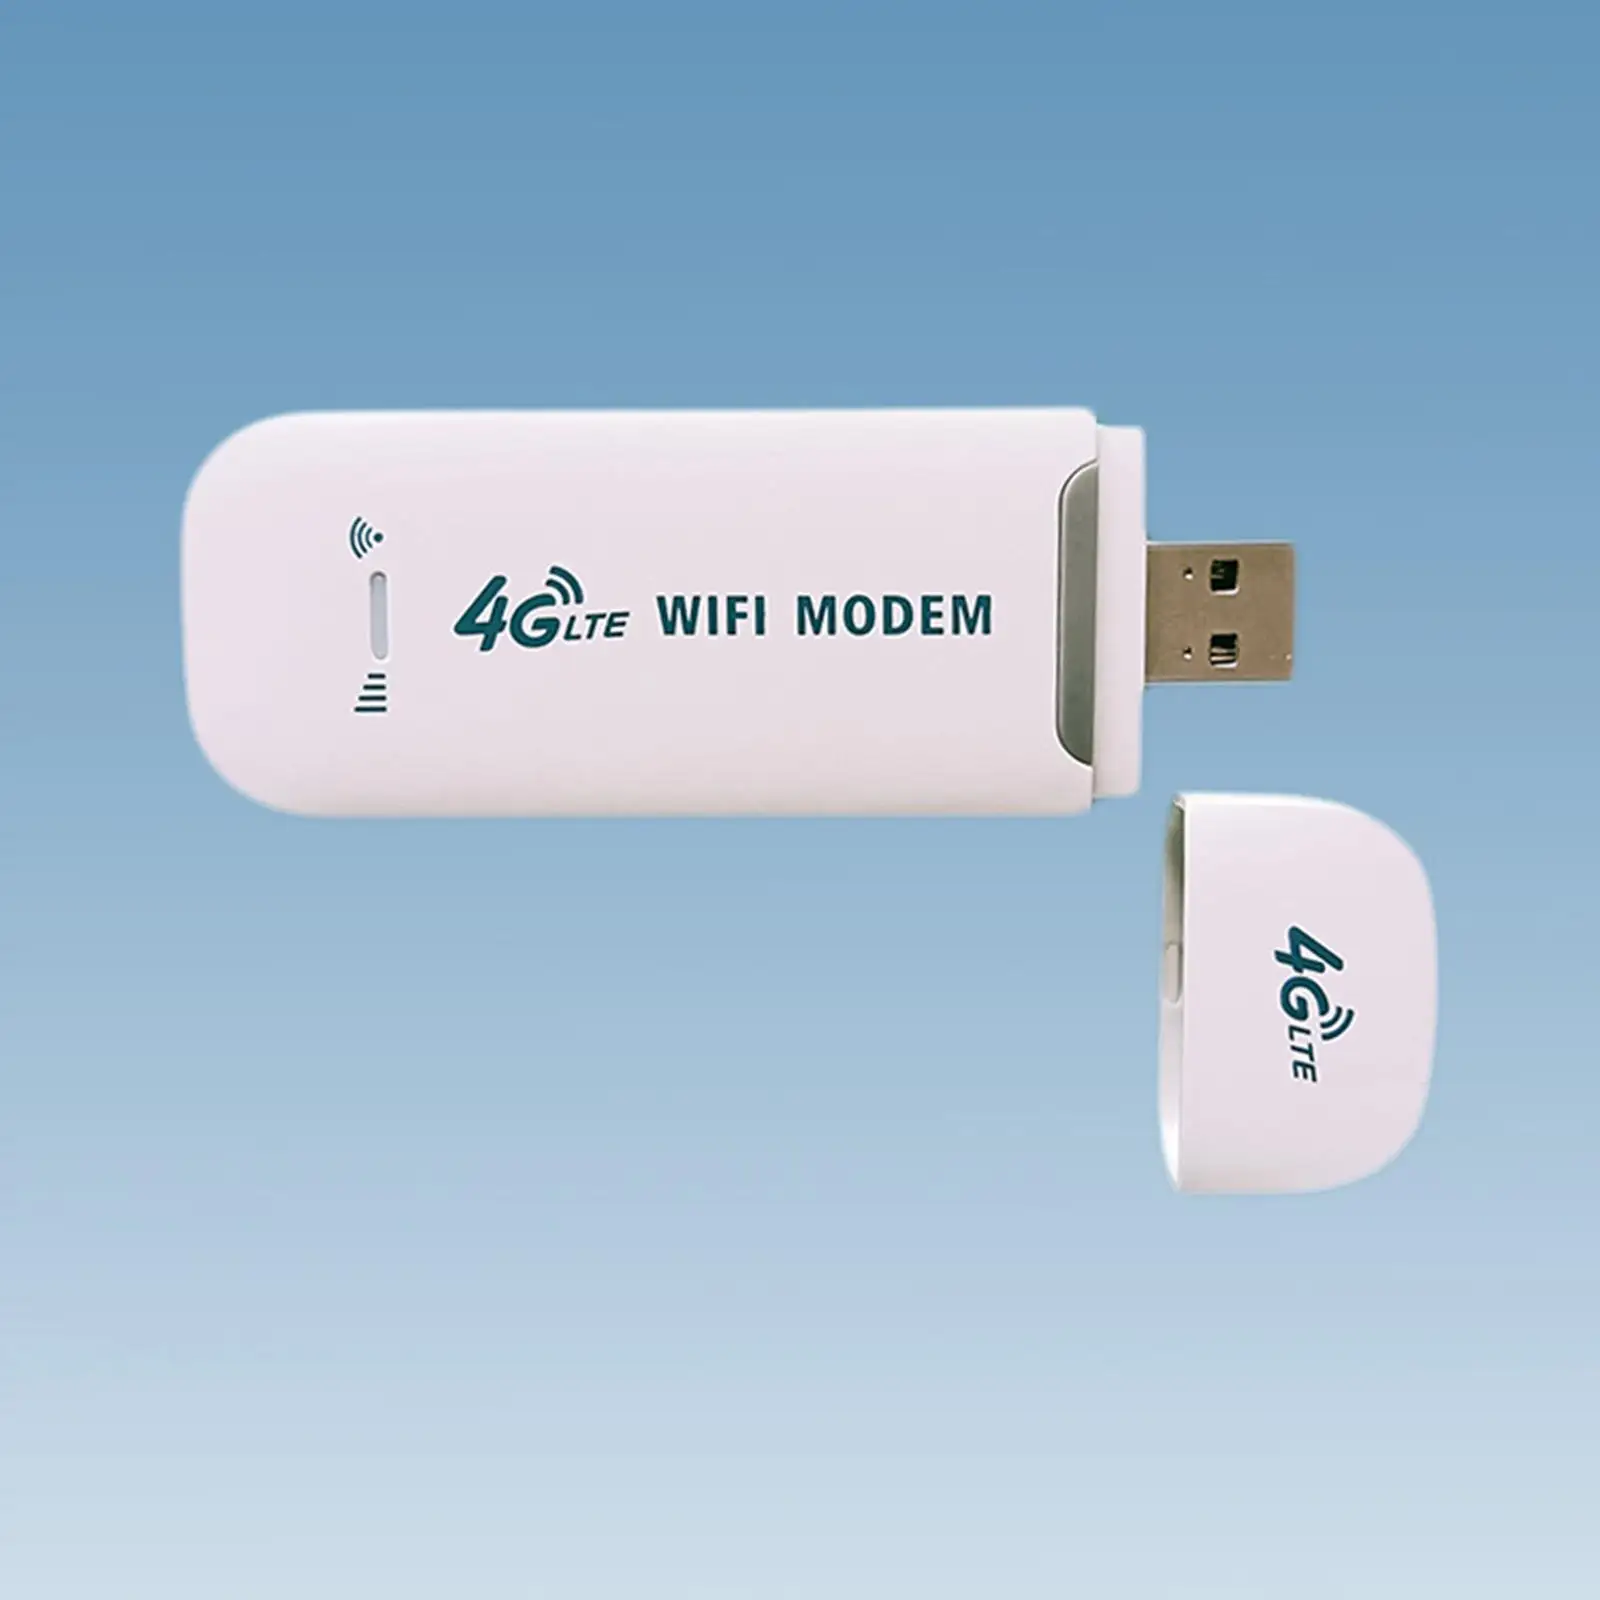 4G LTE USB Modem Dongle Universal WiFi Wireless WiFi Router , for Desktop PC